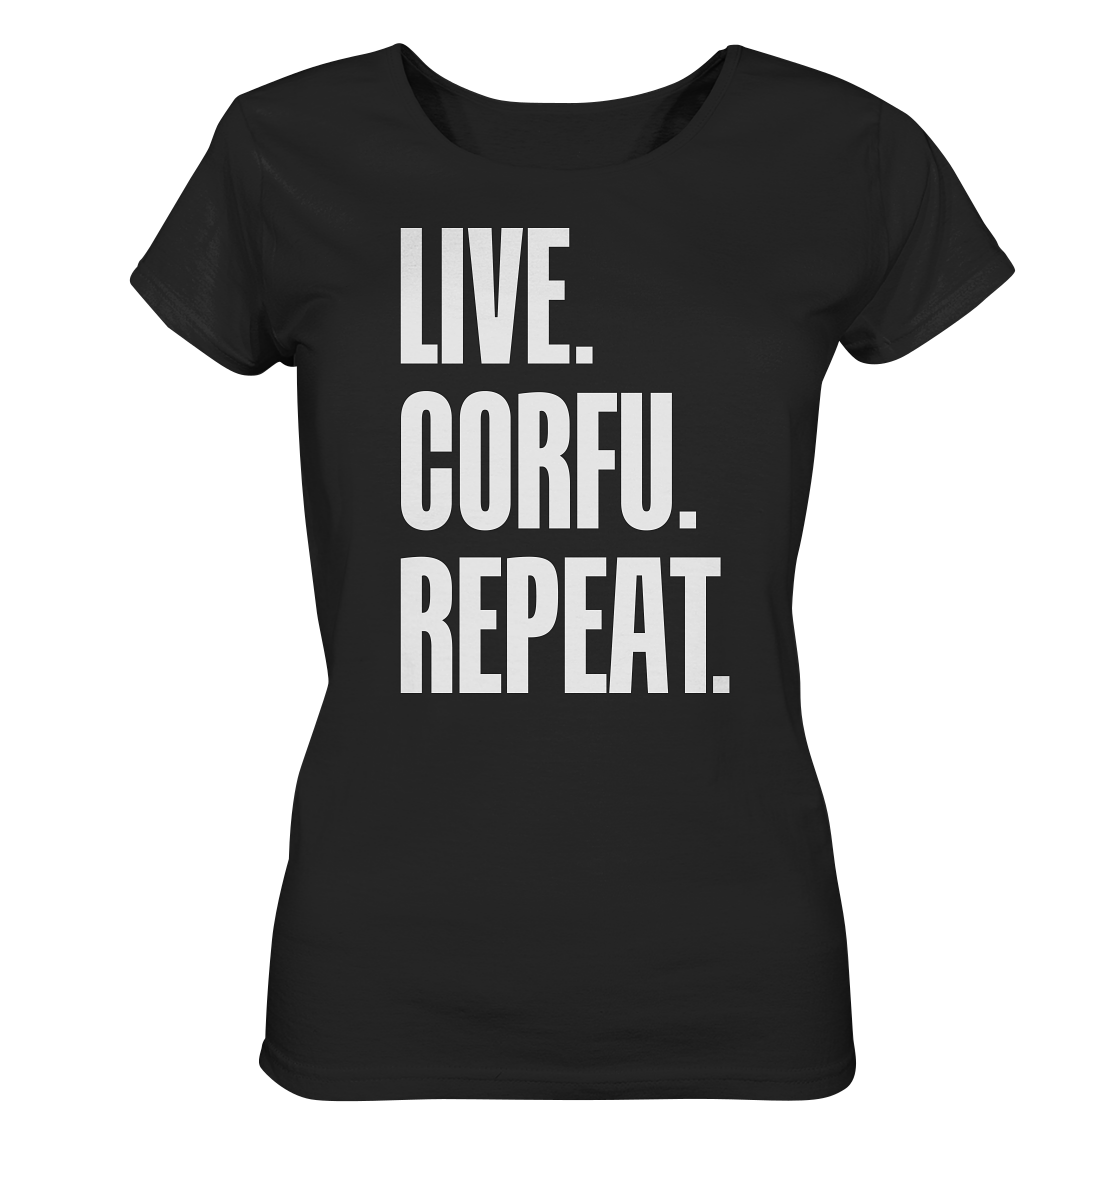 LIVE. CORFU. REPEAT. - Ladies Organic Shirt